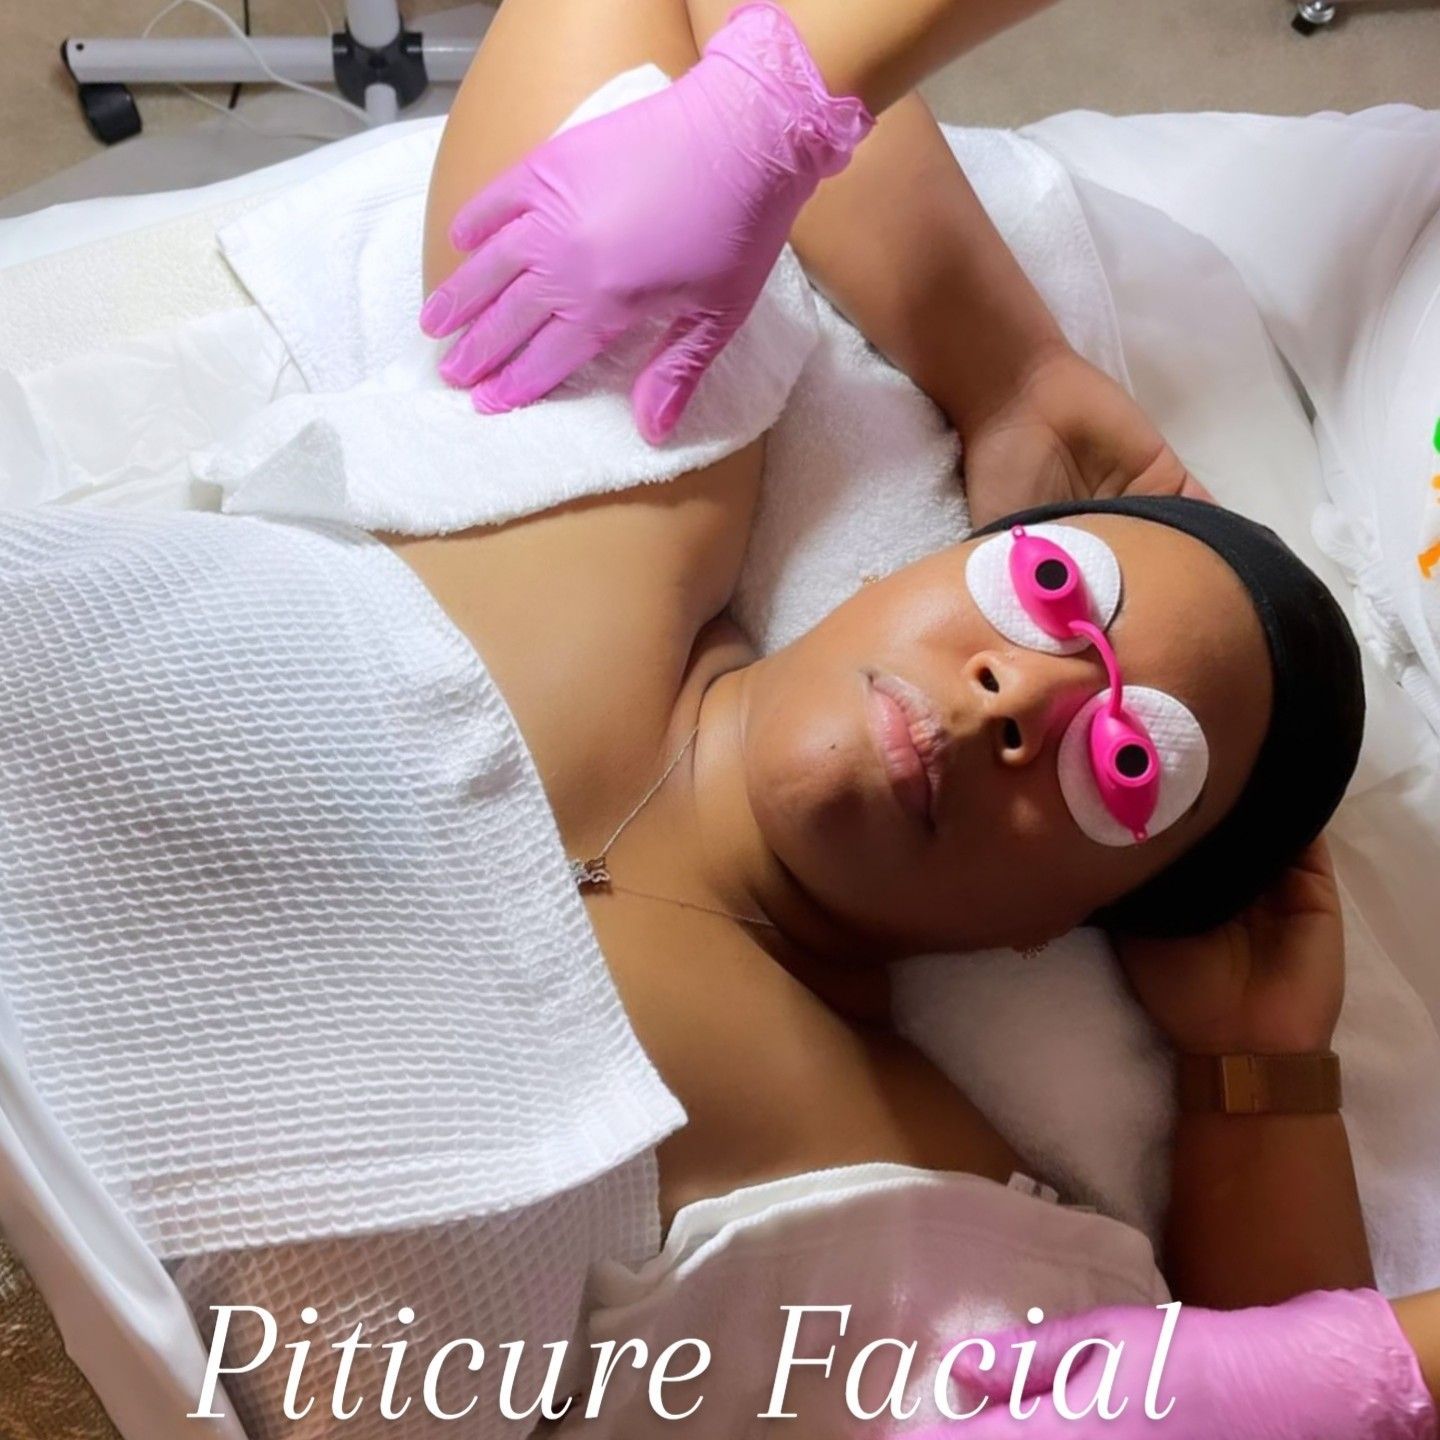 Piticure (Armpits) Facial & Waxing Treatment portfolio